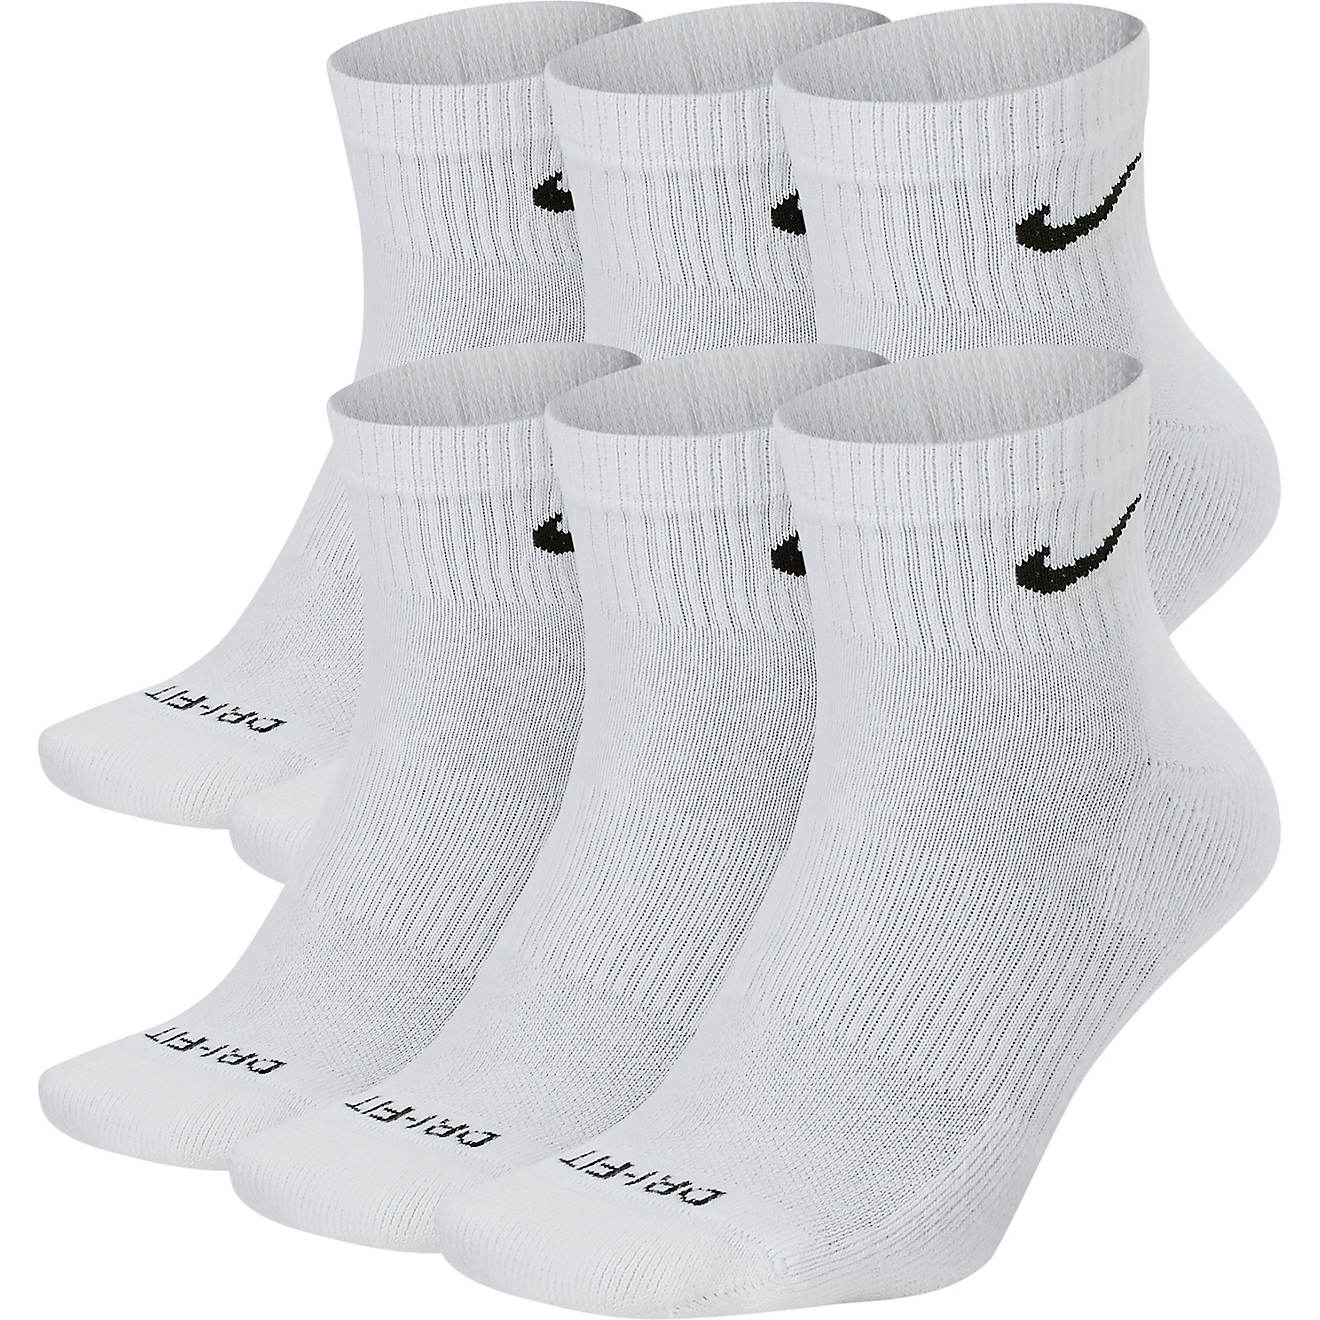 Plus Cushion Dri-FIT Training Ankle Socks Pack | Academy